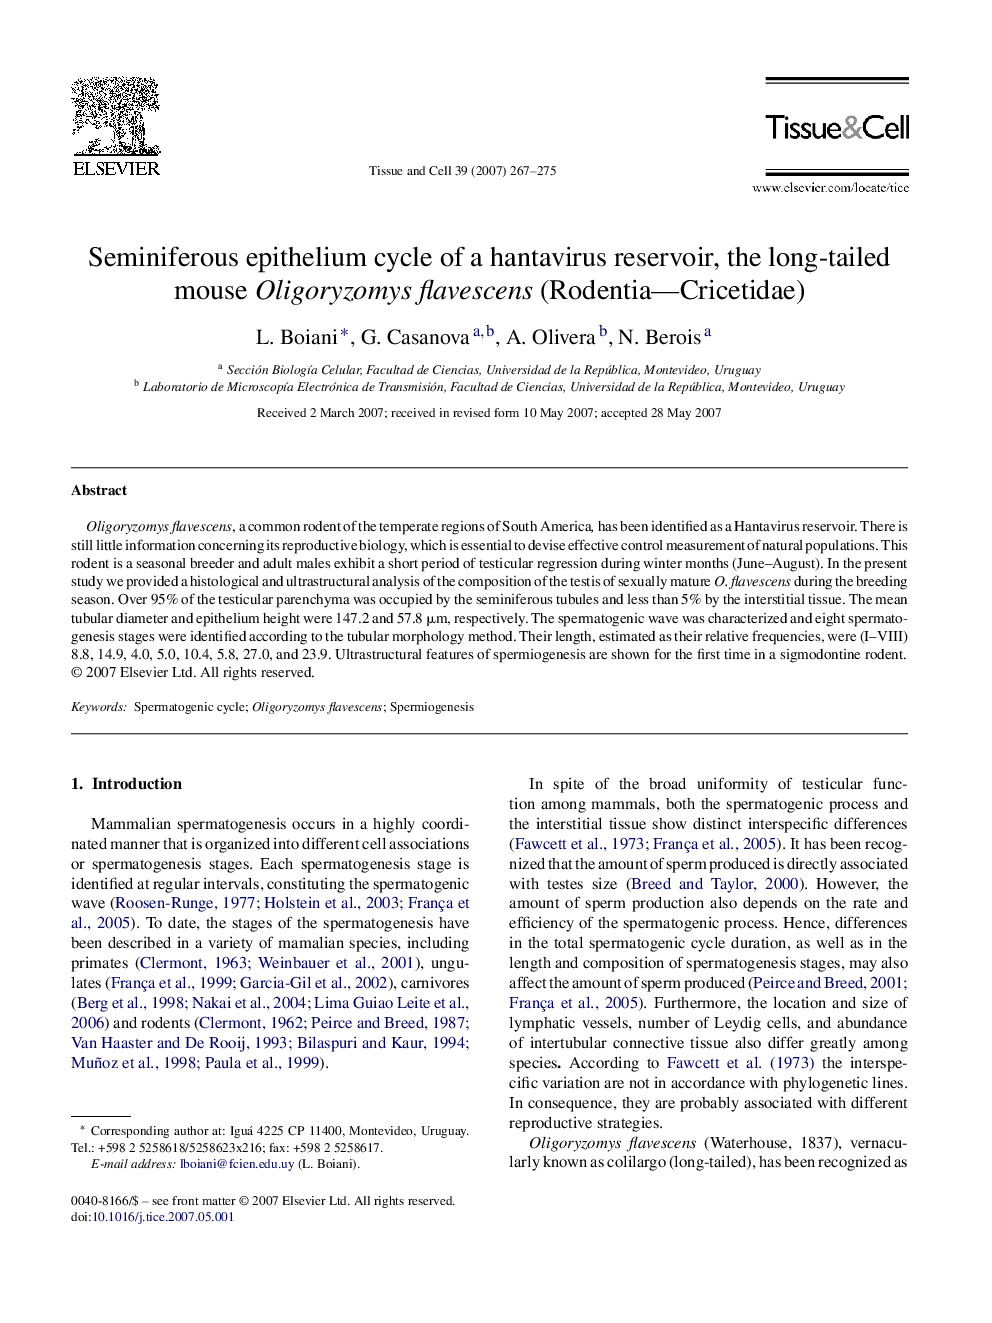 Seminiferous epithelium cycle of a hantavirus reservoir, the long-tailed mouse Oligoryzomys flavescens (Rodentia—Cricetidae)